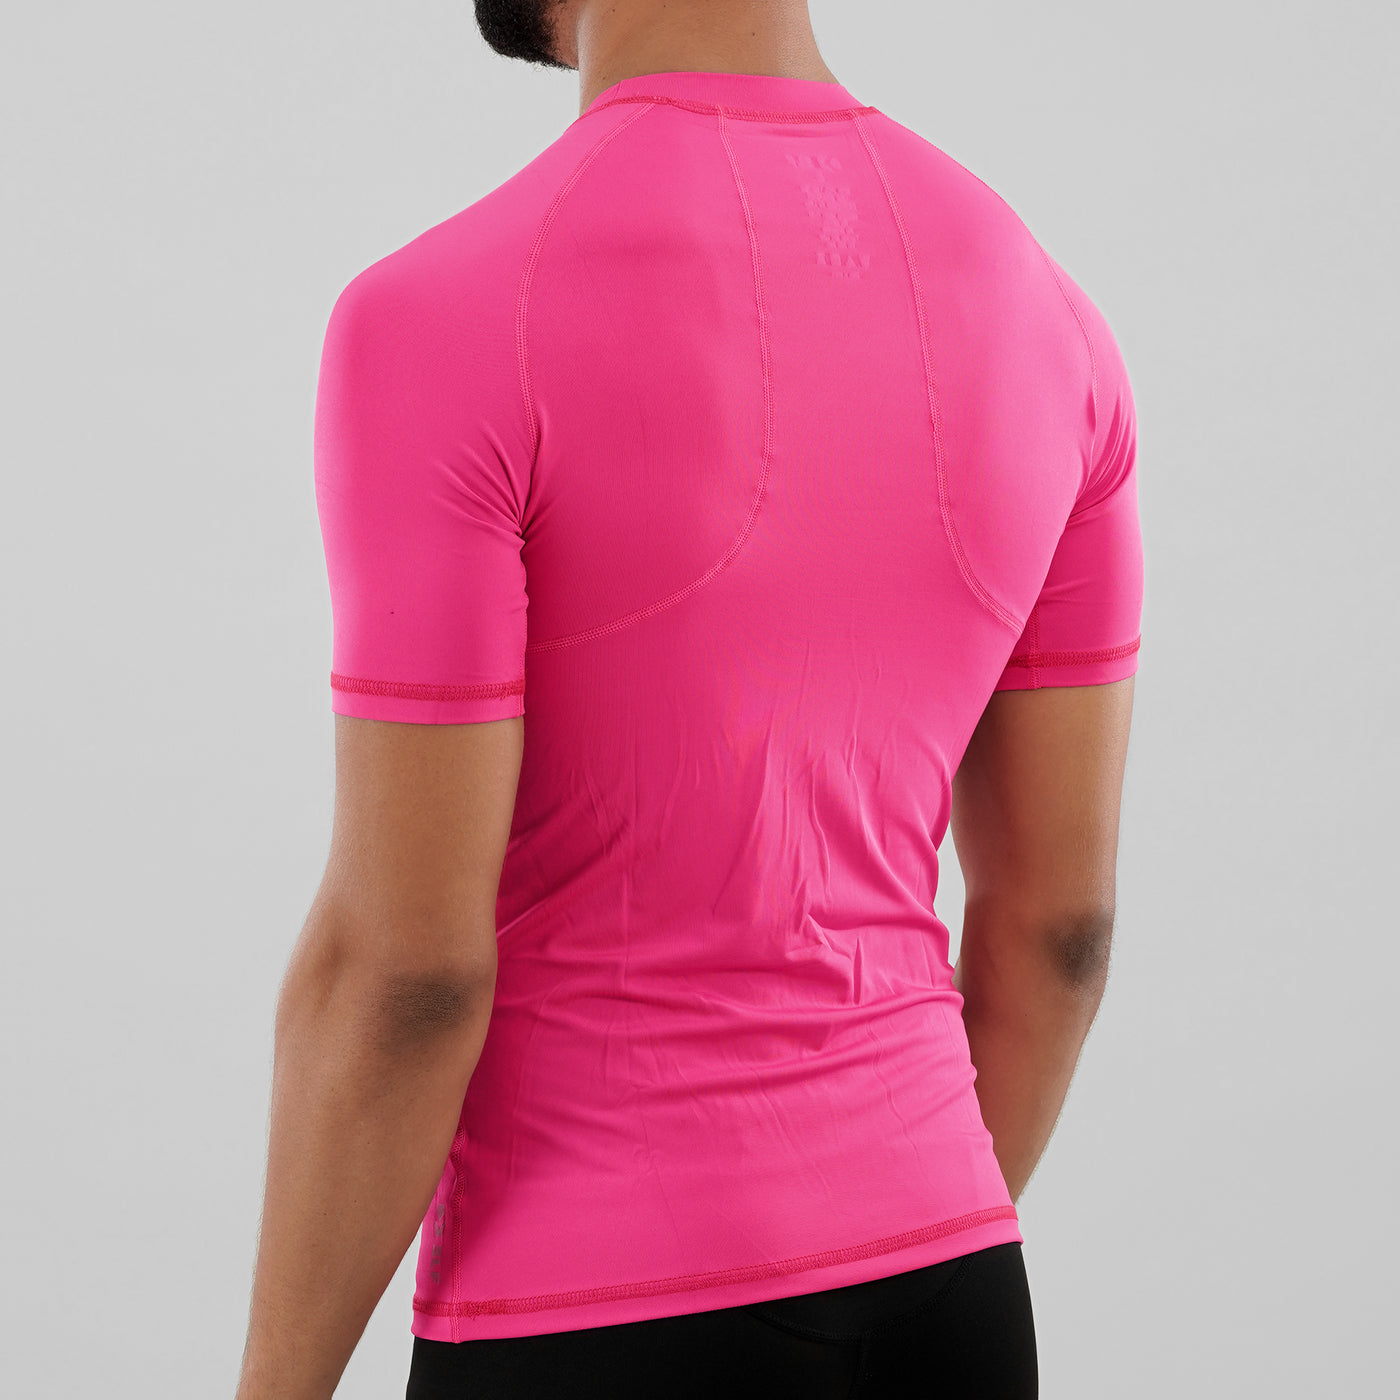 Hue Pink Compression Shirt